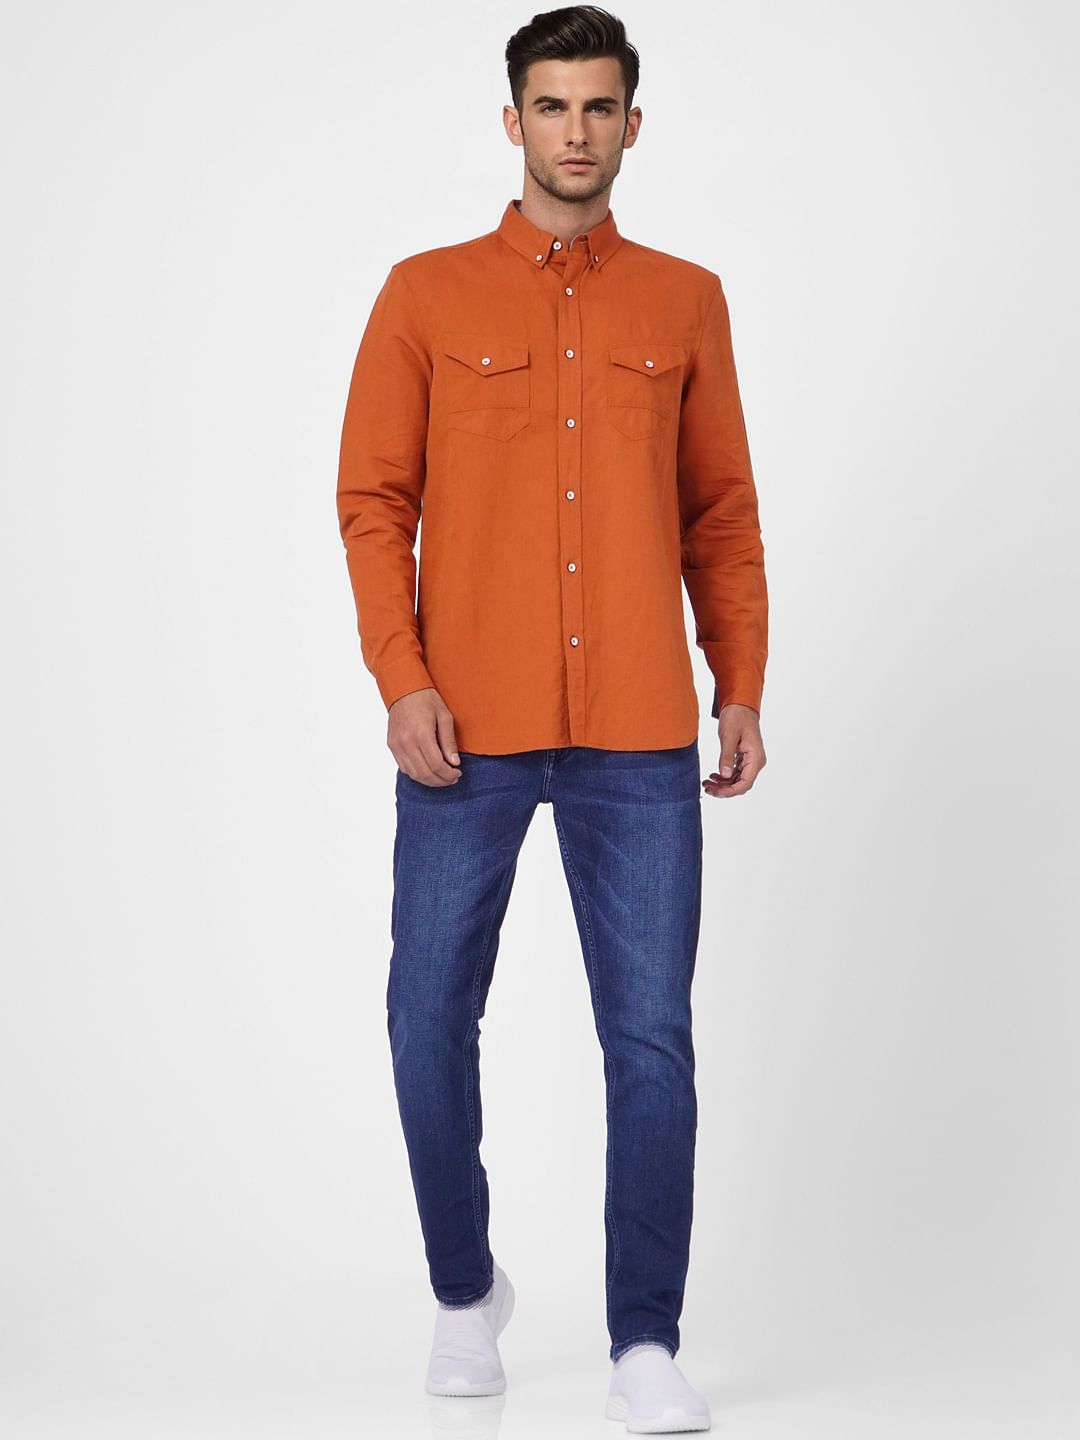 Men's Denim Shirts | Chambray & Jeans Shirts | ASOS